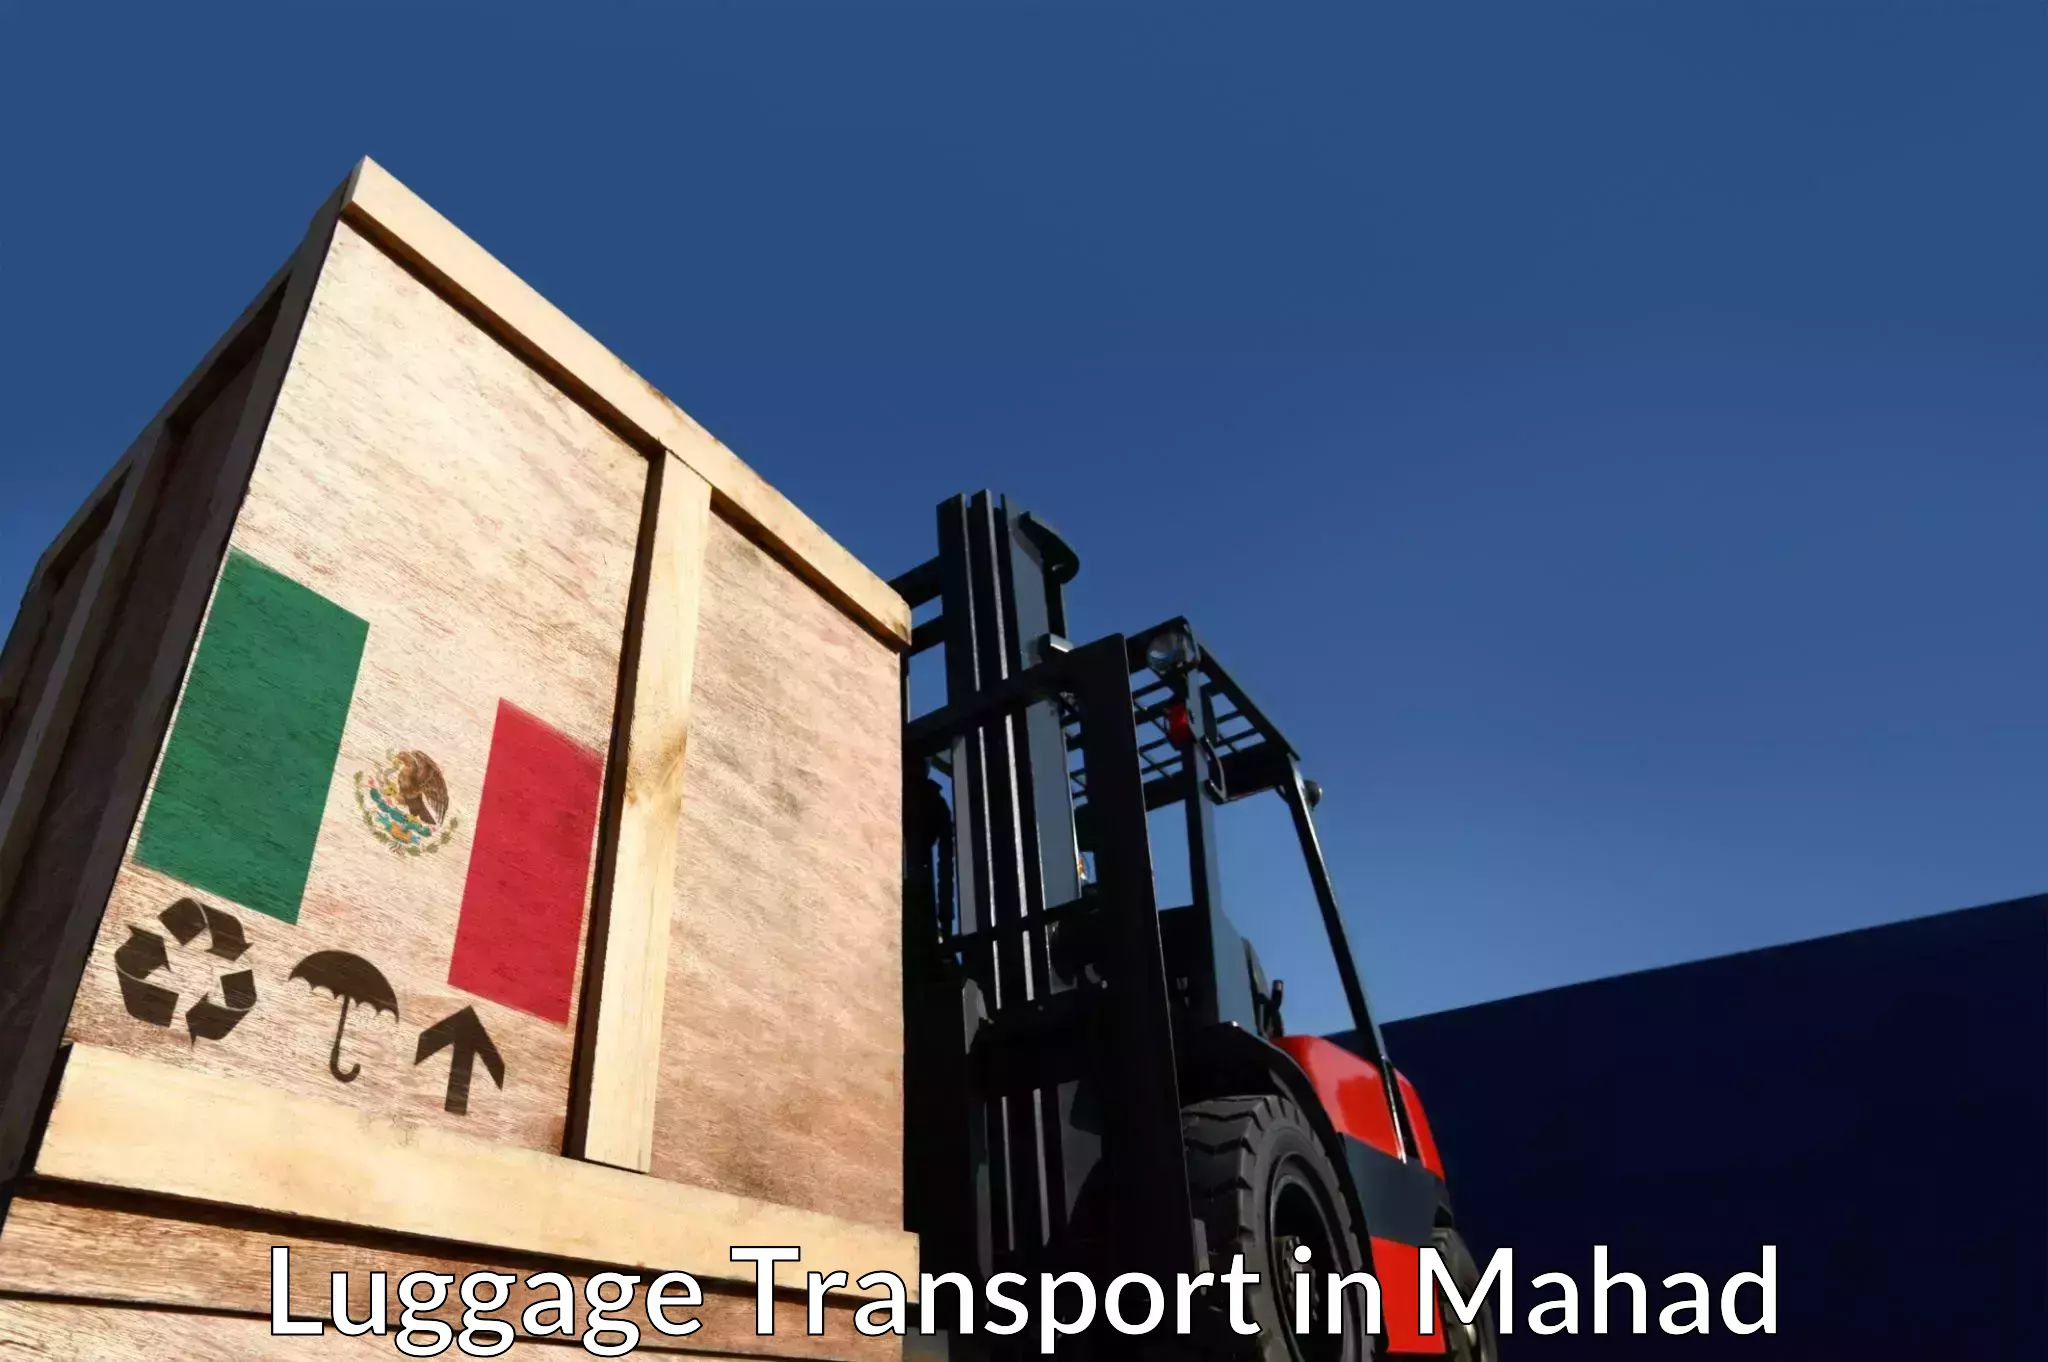 Luggage shipment tracking in Mahad